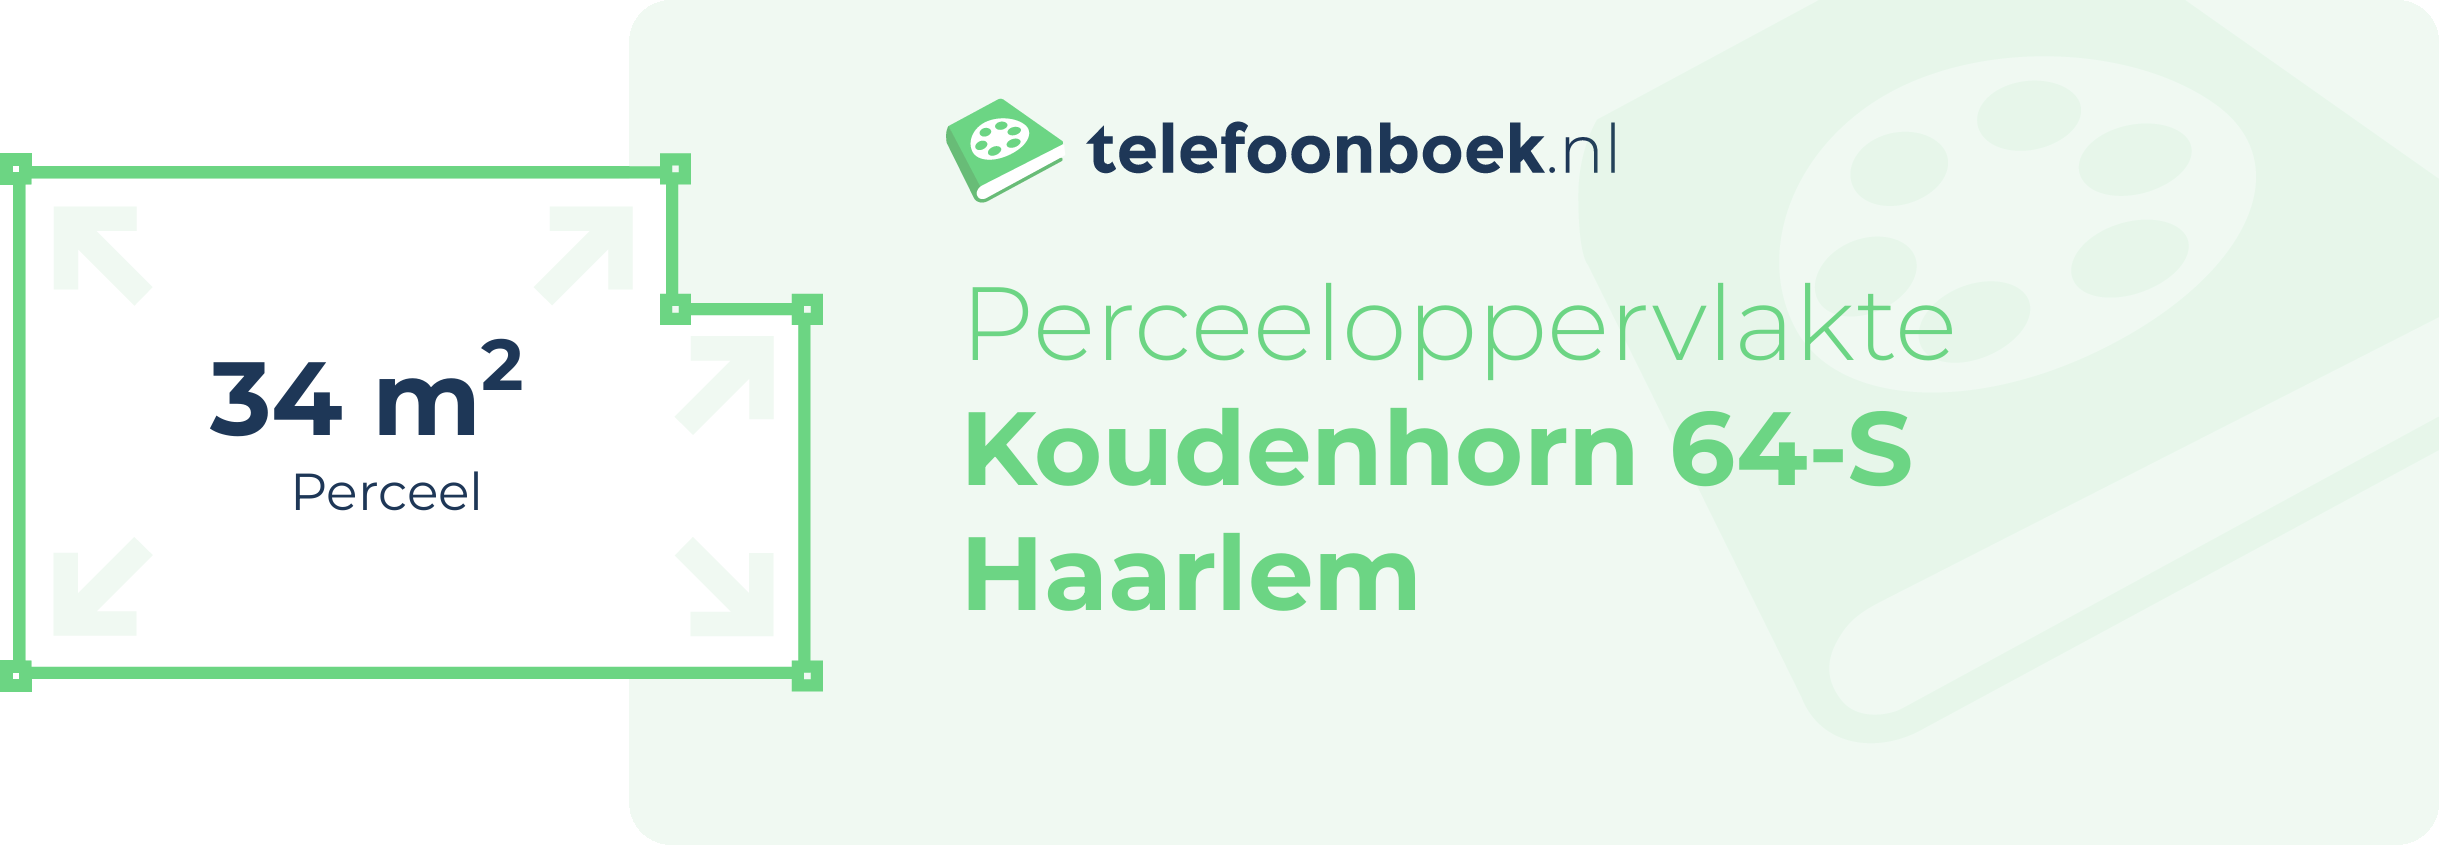 Perceeloppervlakte Koudenhorn 64-S Haarlem